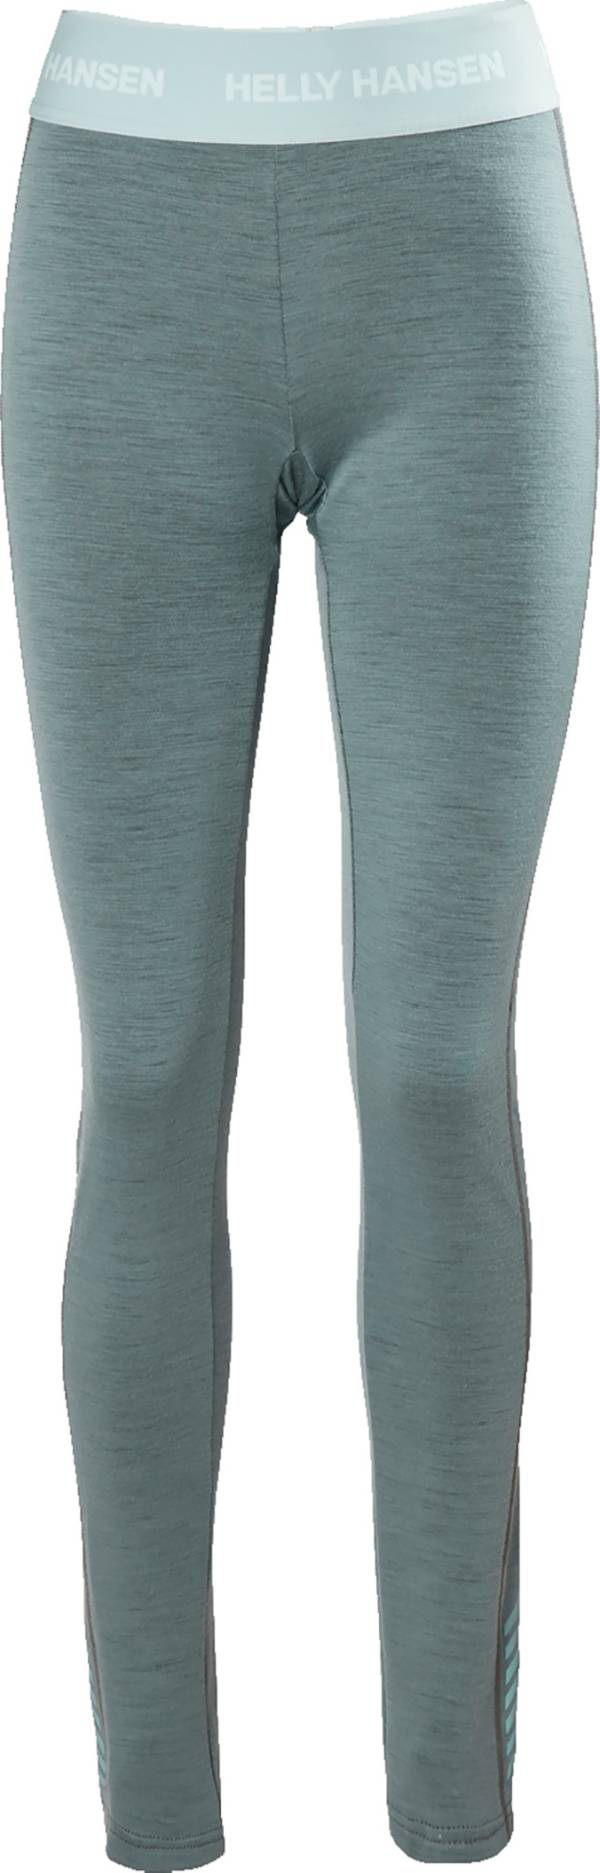 Helly Hansen Women's Lifa Merino Lightweight Pants product image